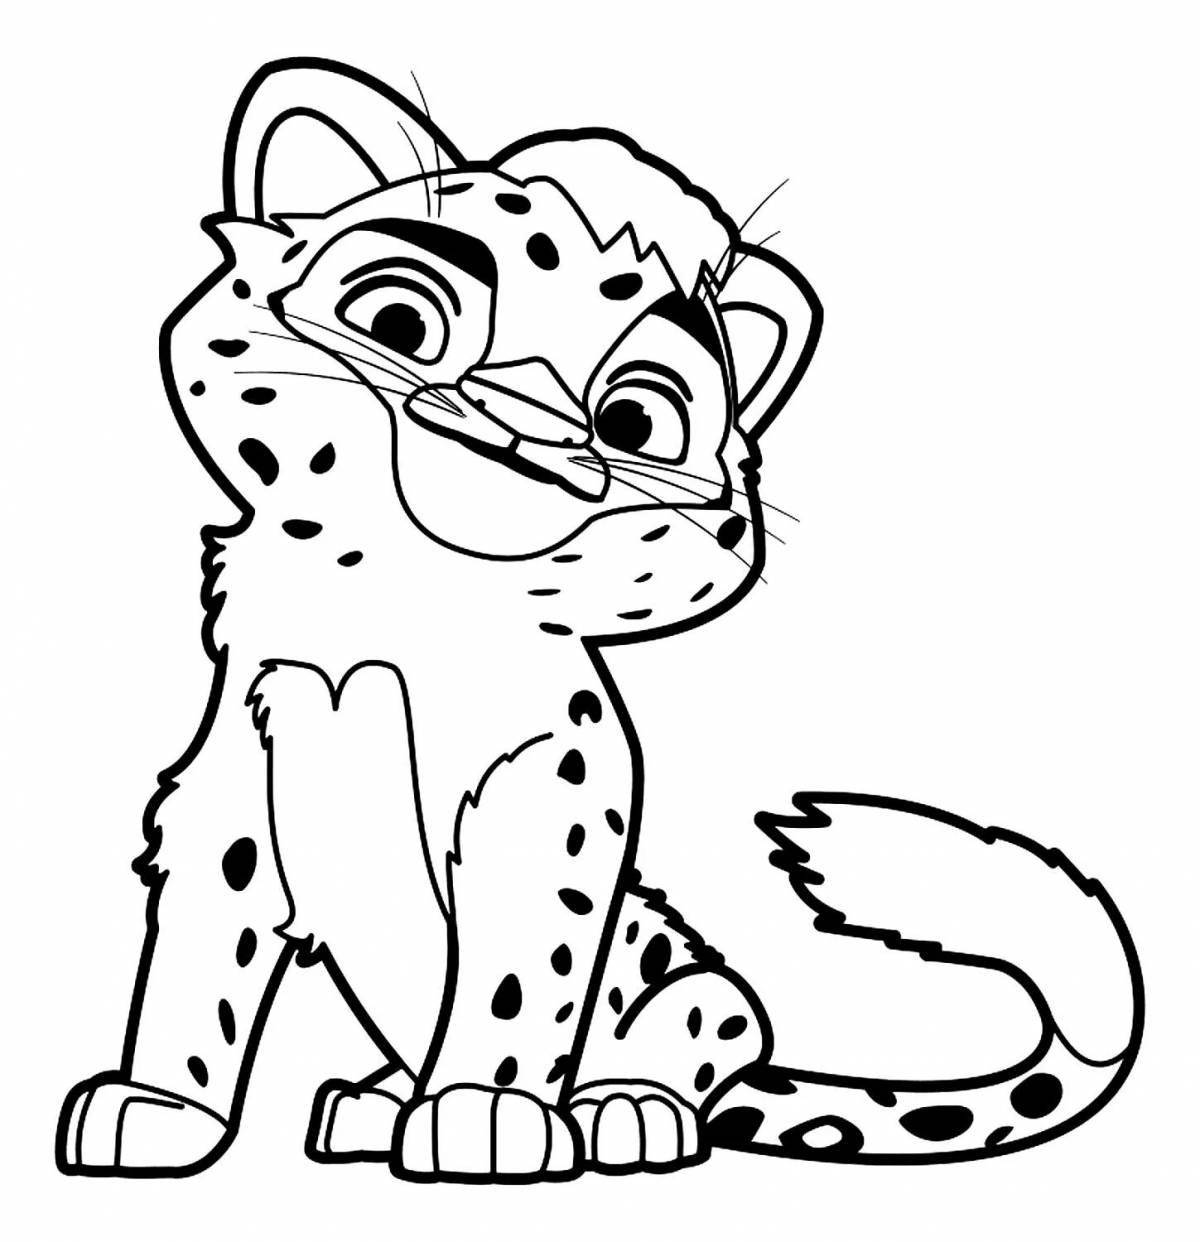 Coloring beckoning leopard